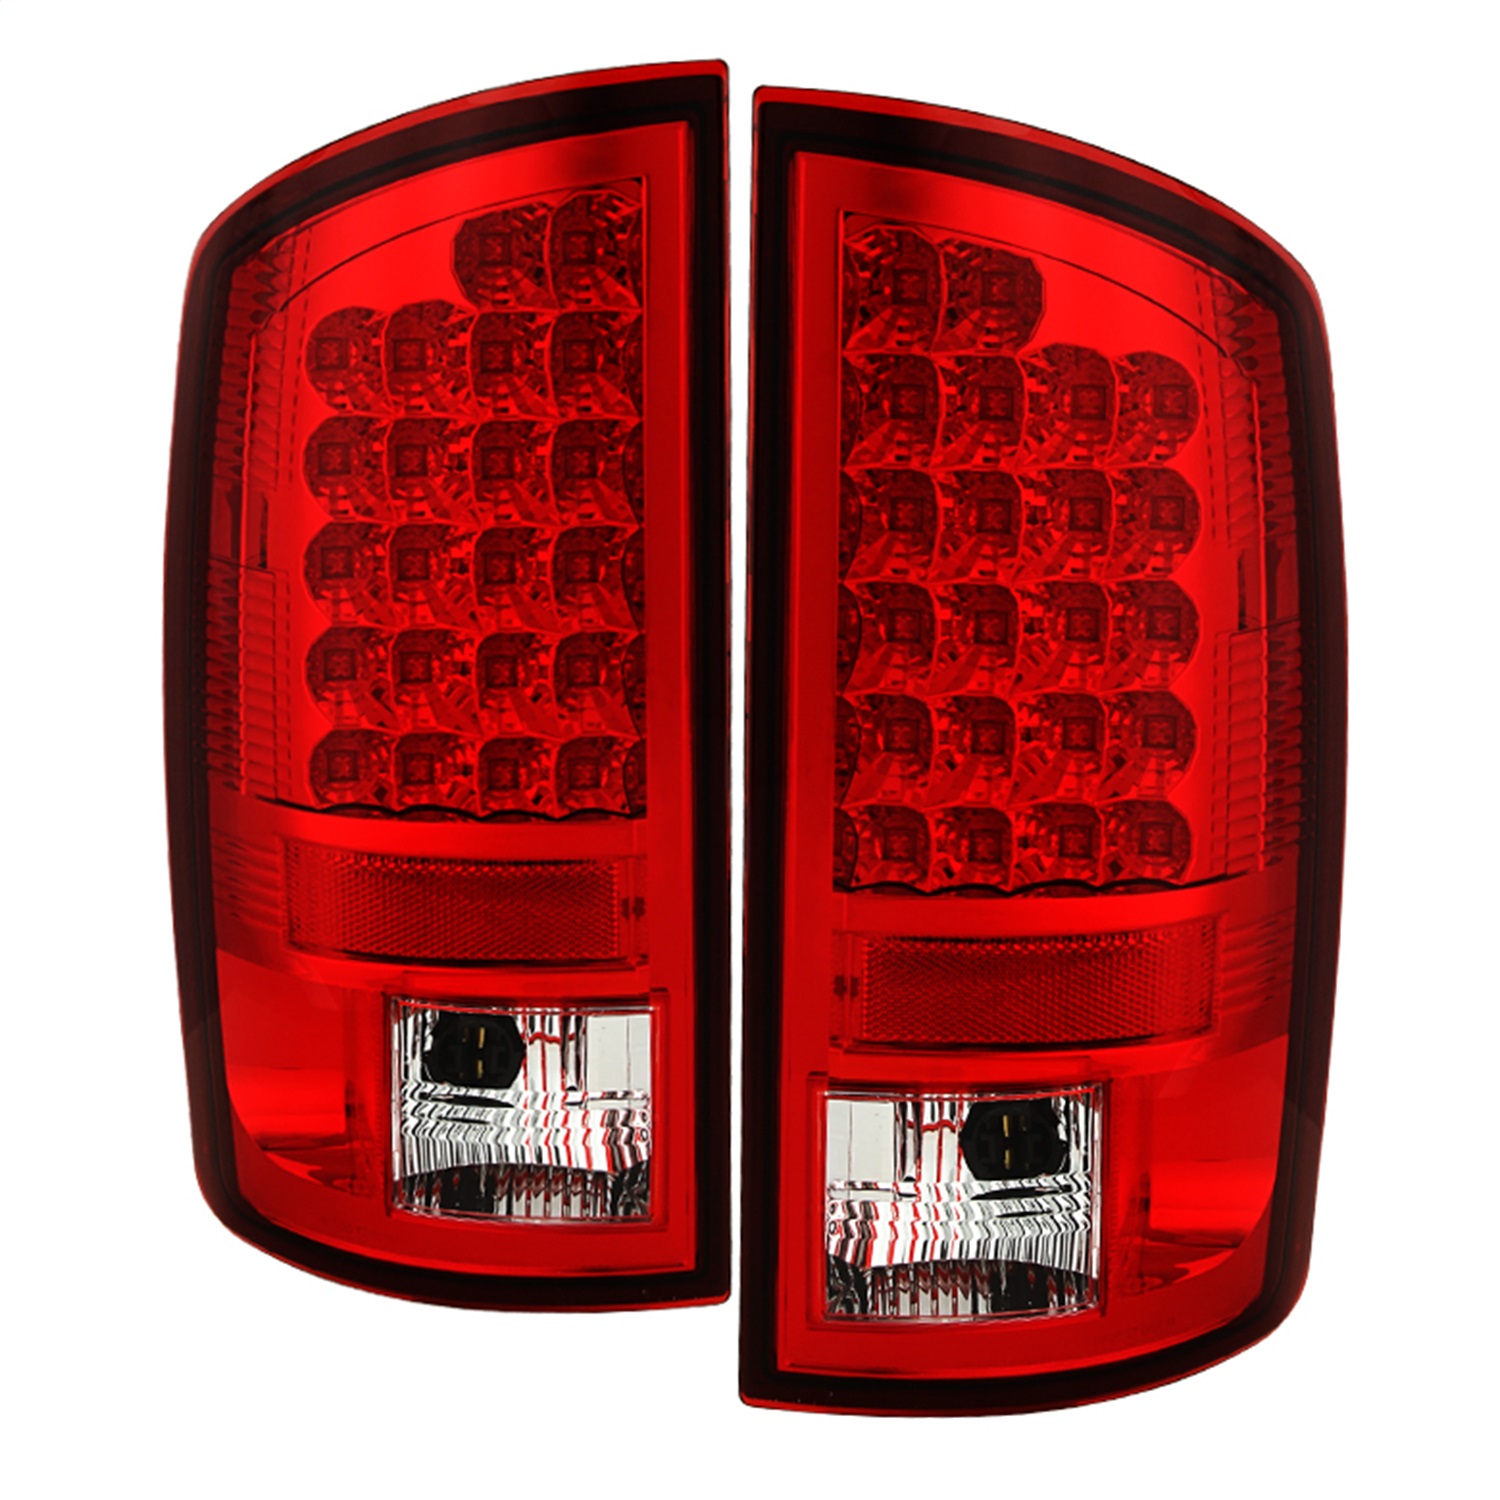 Spyder Auto 5002631 LED Tail Lights Fits 07-09 Ram 1500 Ram 2500 Ram 3500